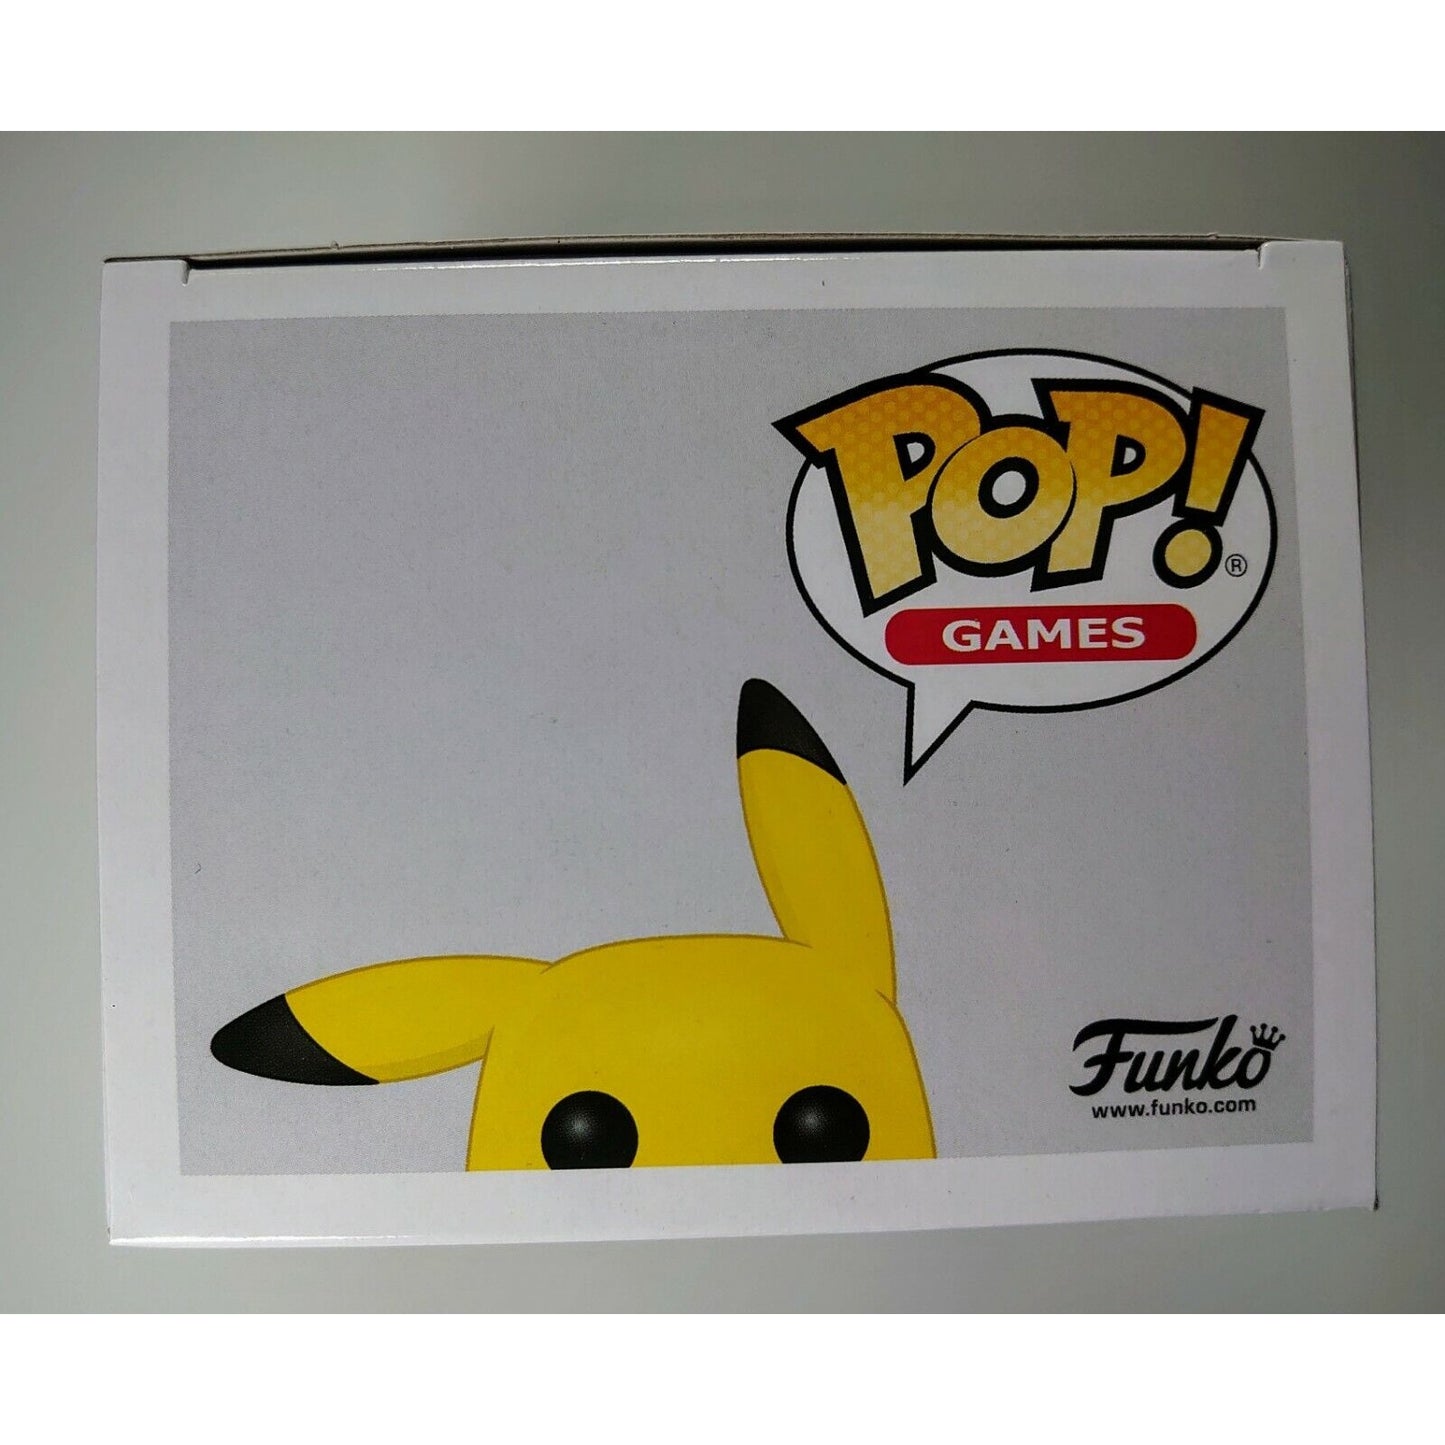 Funko POP Gamestop Exclusive Pokemon Diamond Pikachu Figure #553 Perfect Fit Box